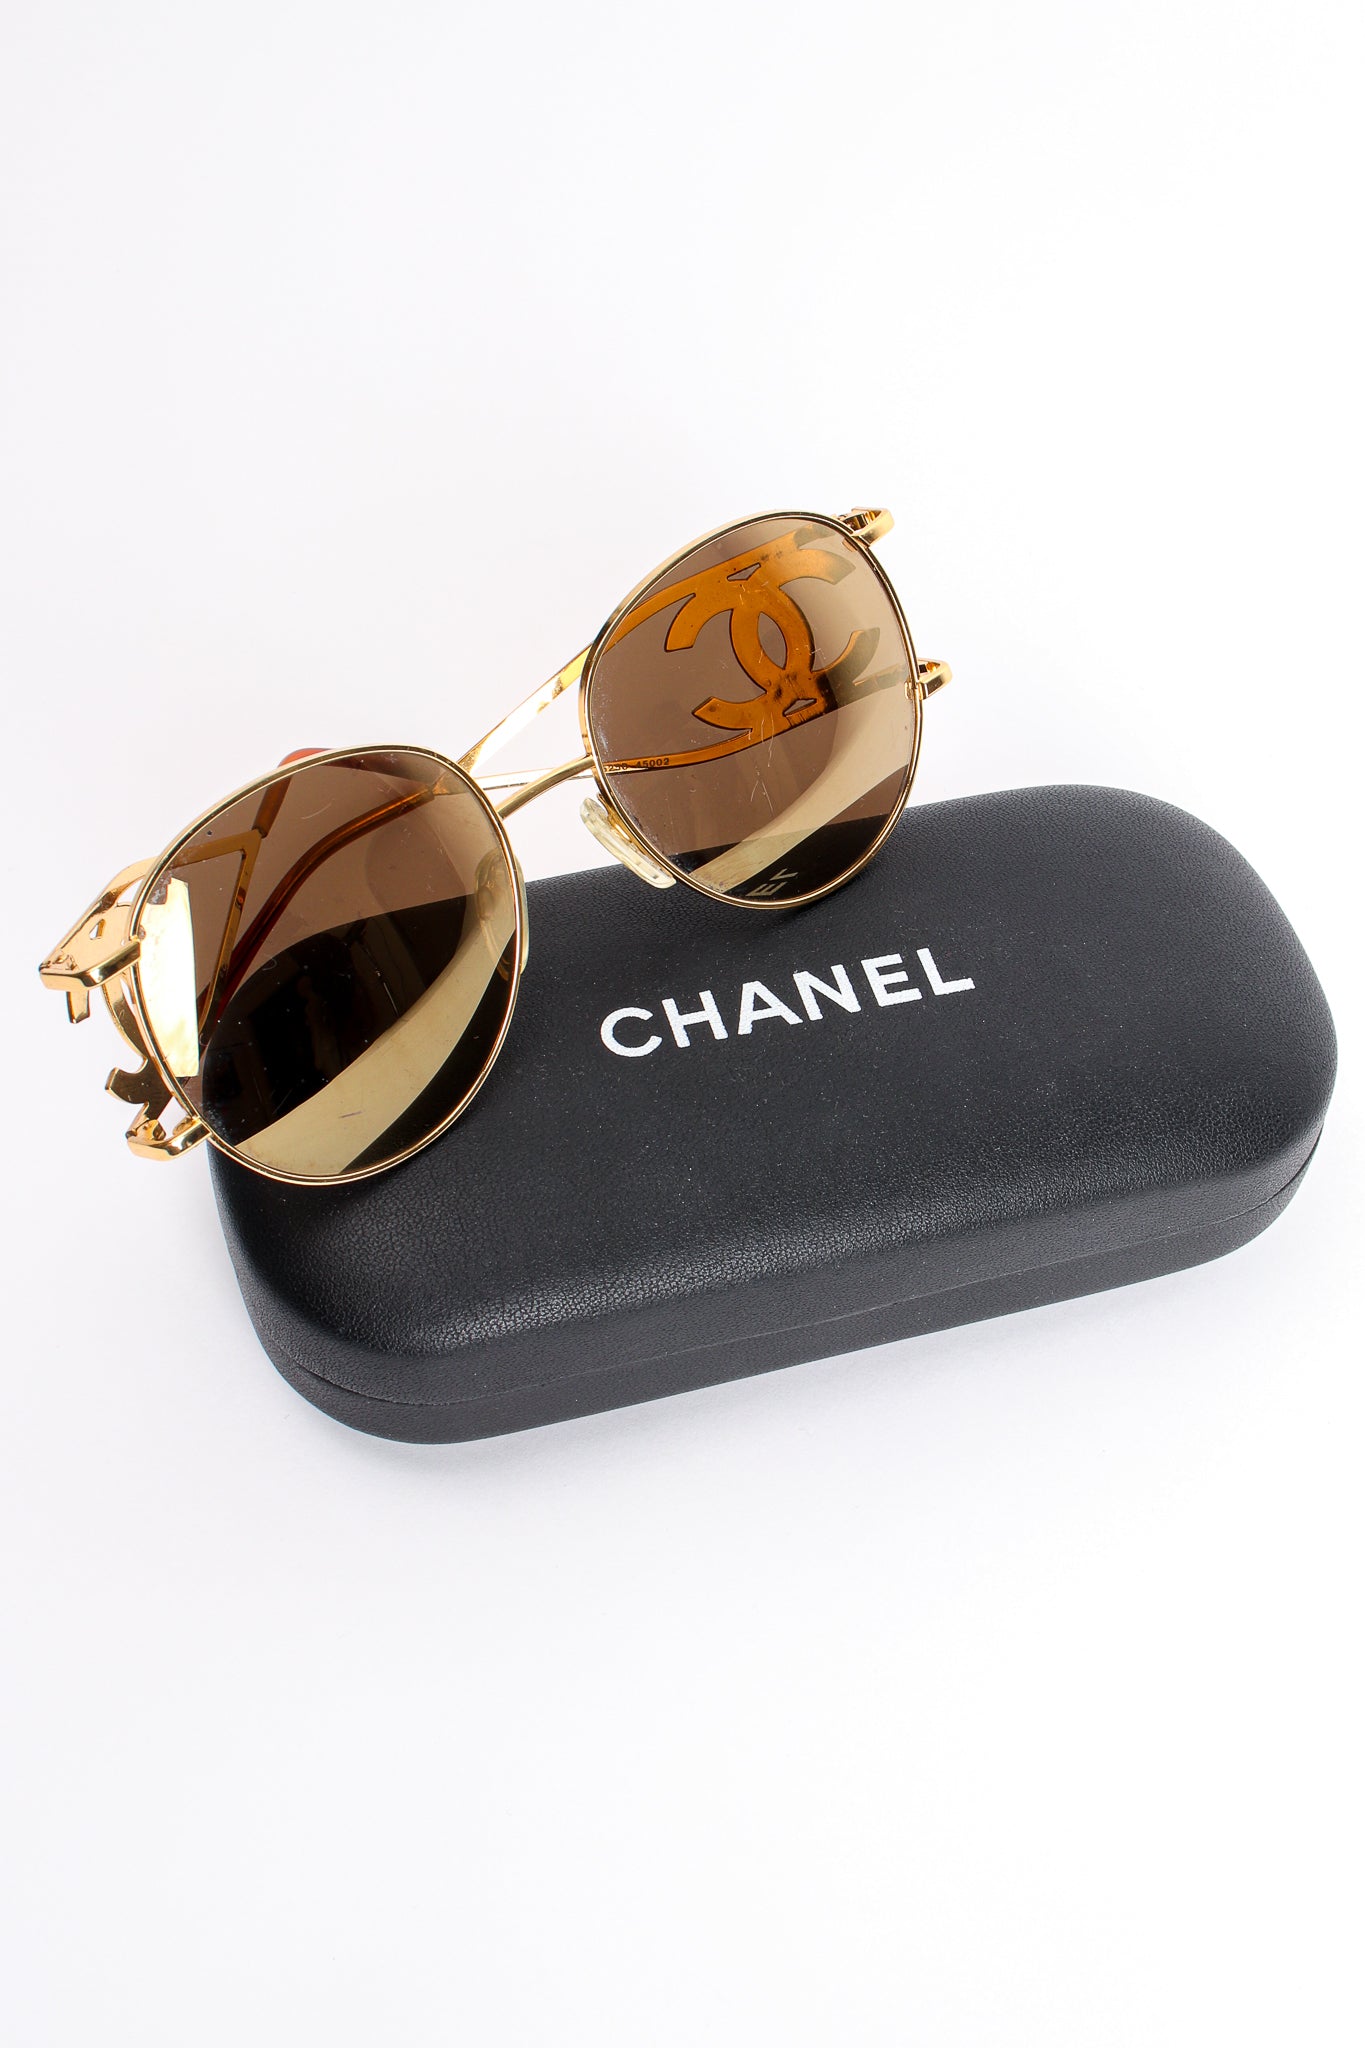 chain chanel sunglasses authentic